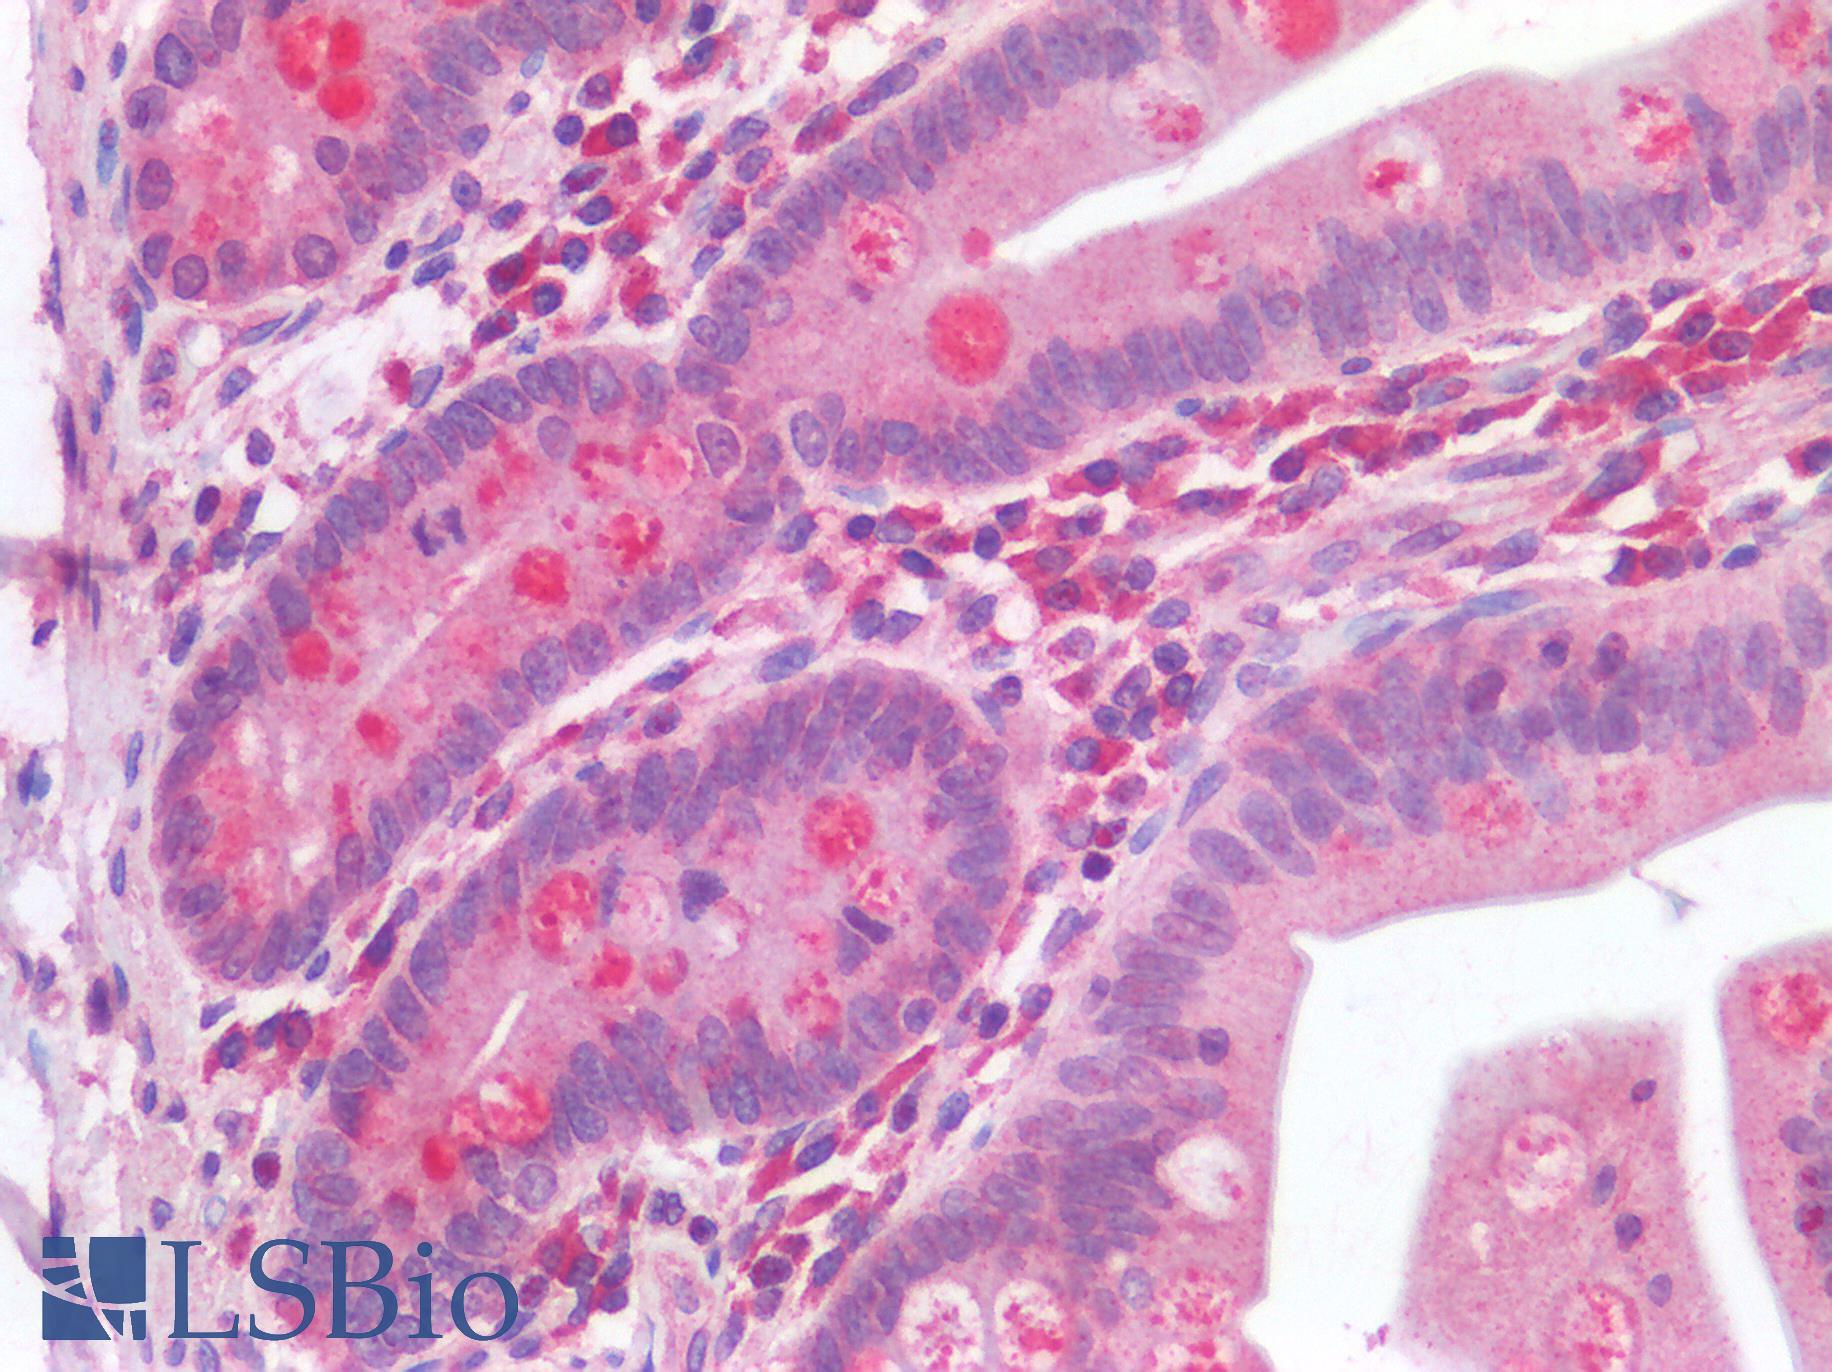 IL-33 Antibody - Human Small Intestine: Formalin-Fixed, Paraffin-Embedded (FFPE)